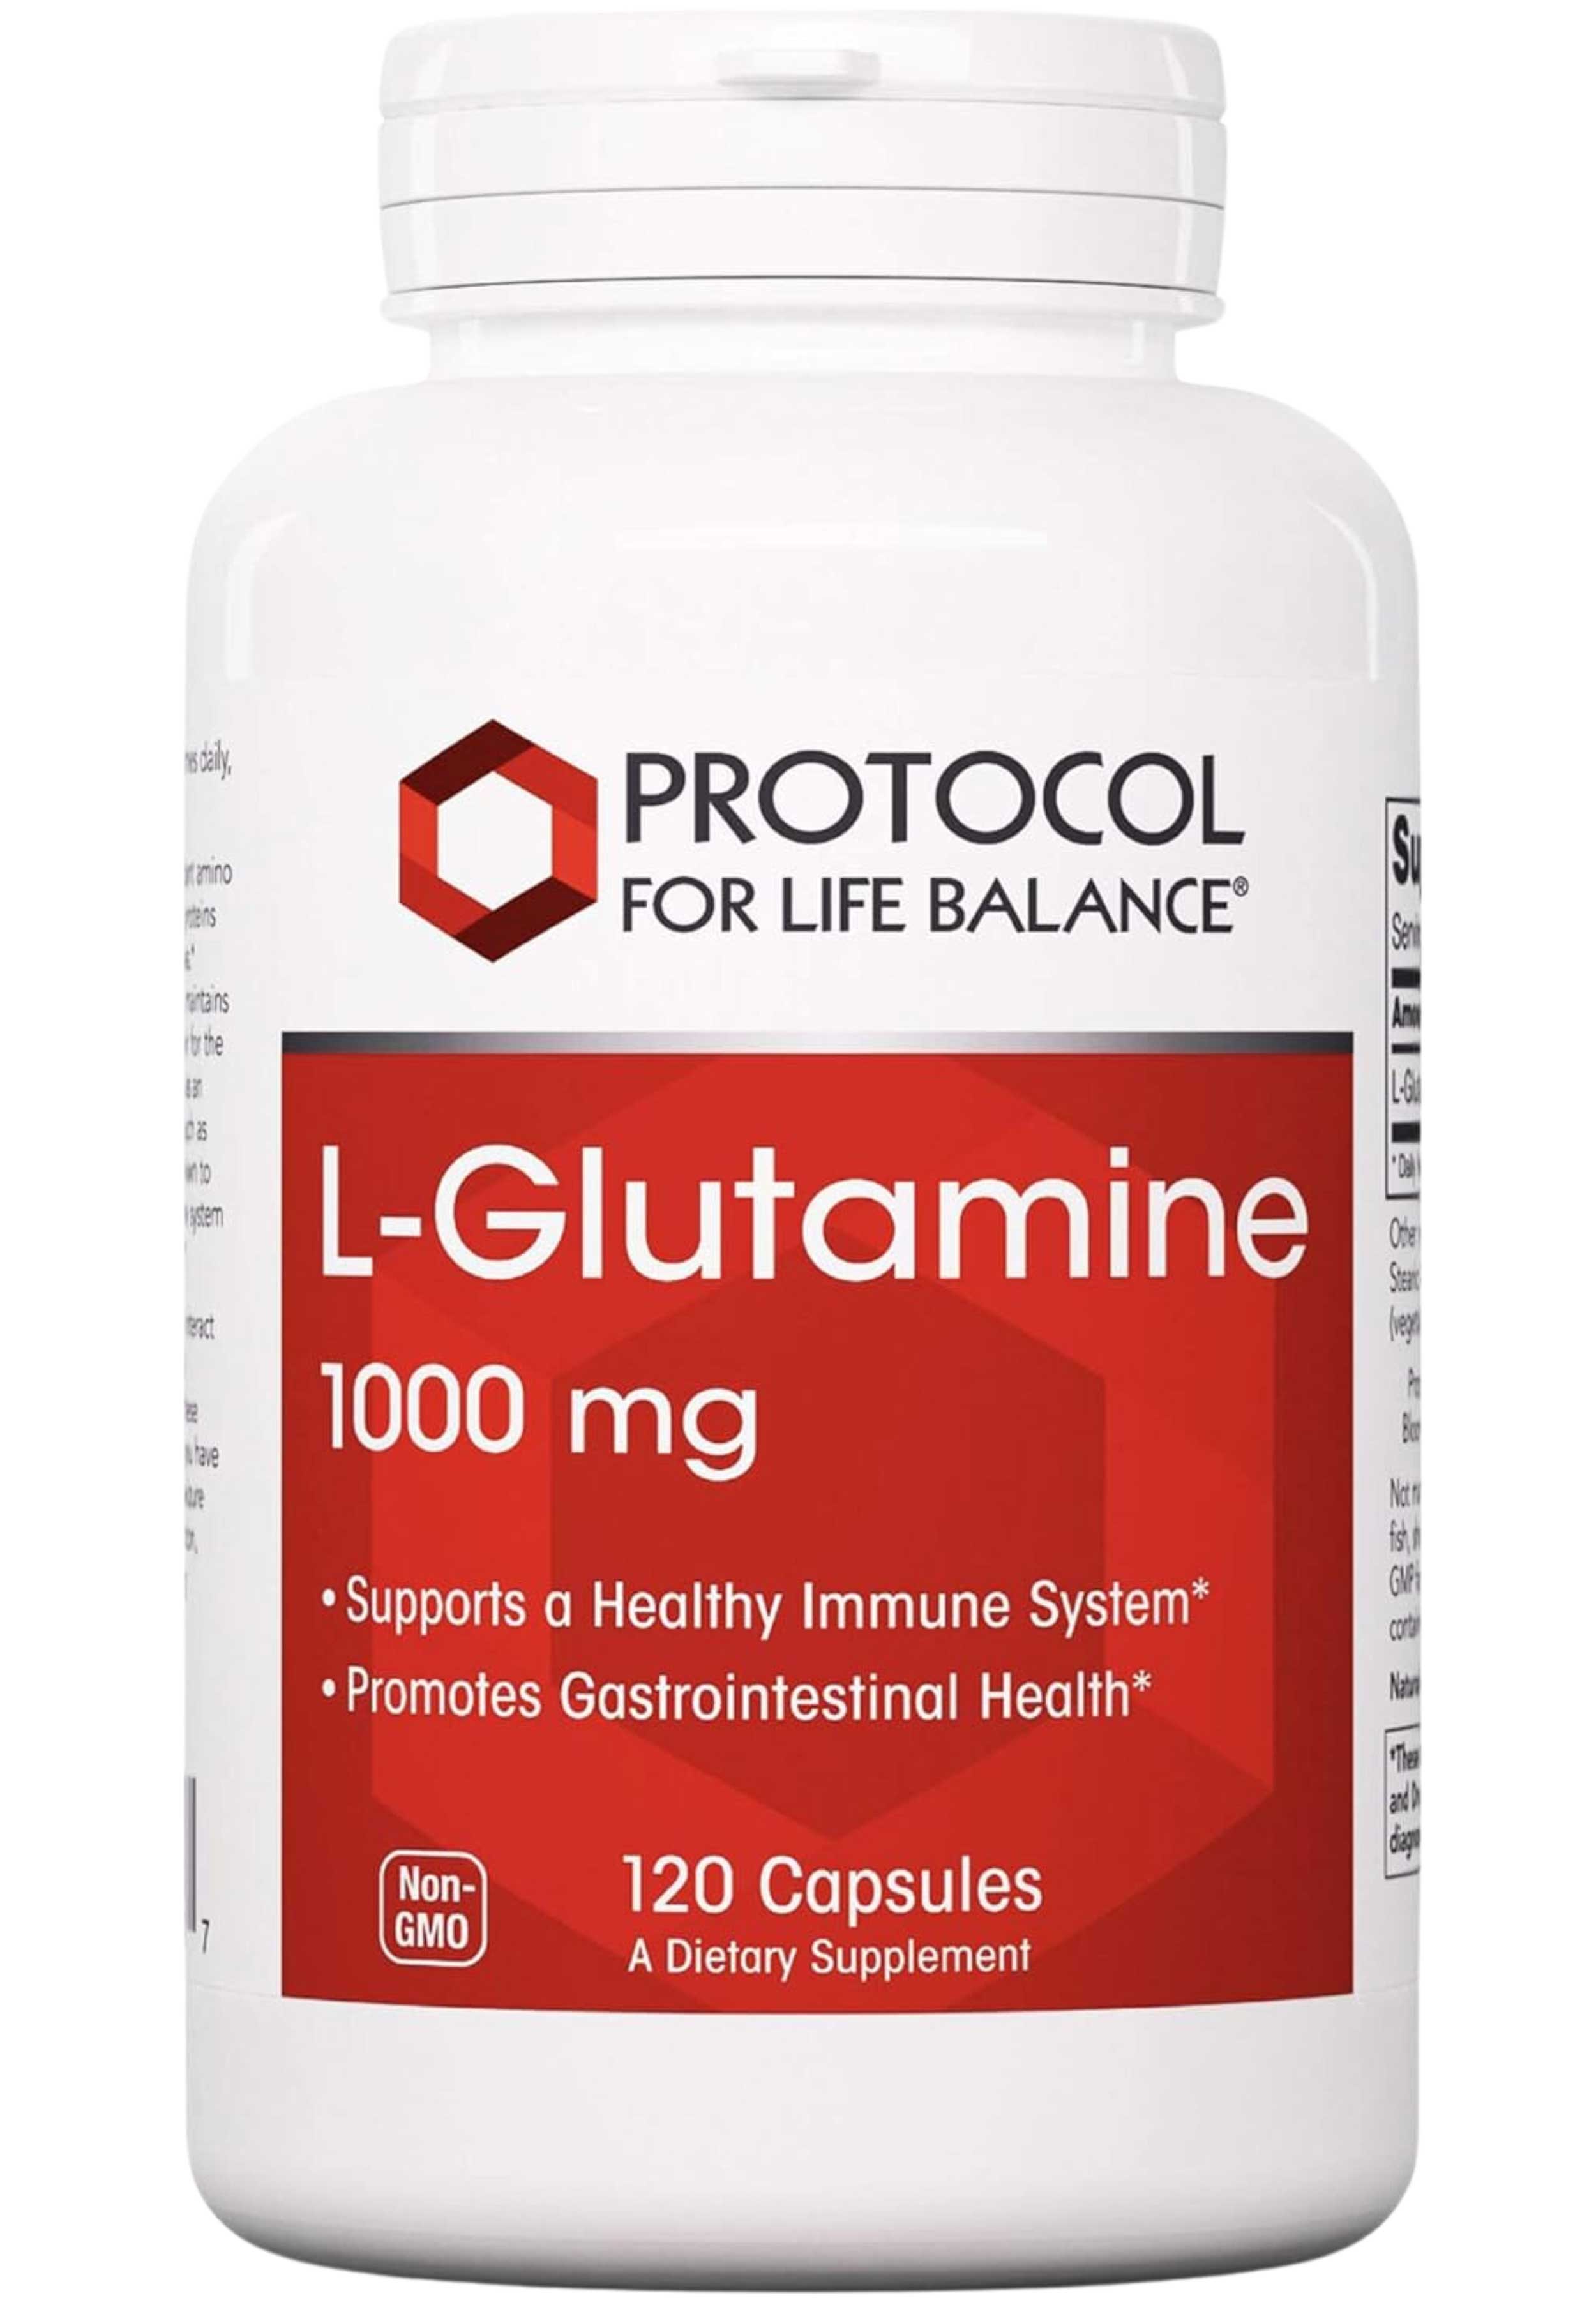 Protocol for Life Balance L-Glutamine 1000 mg